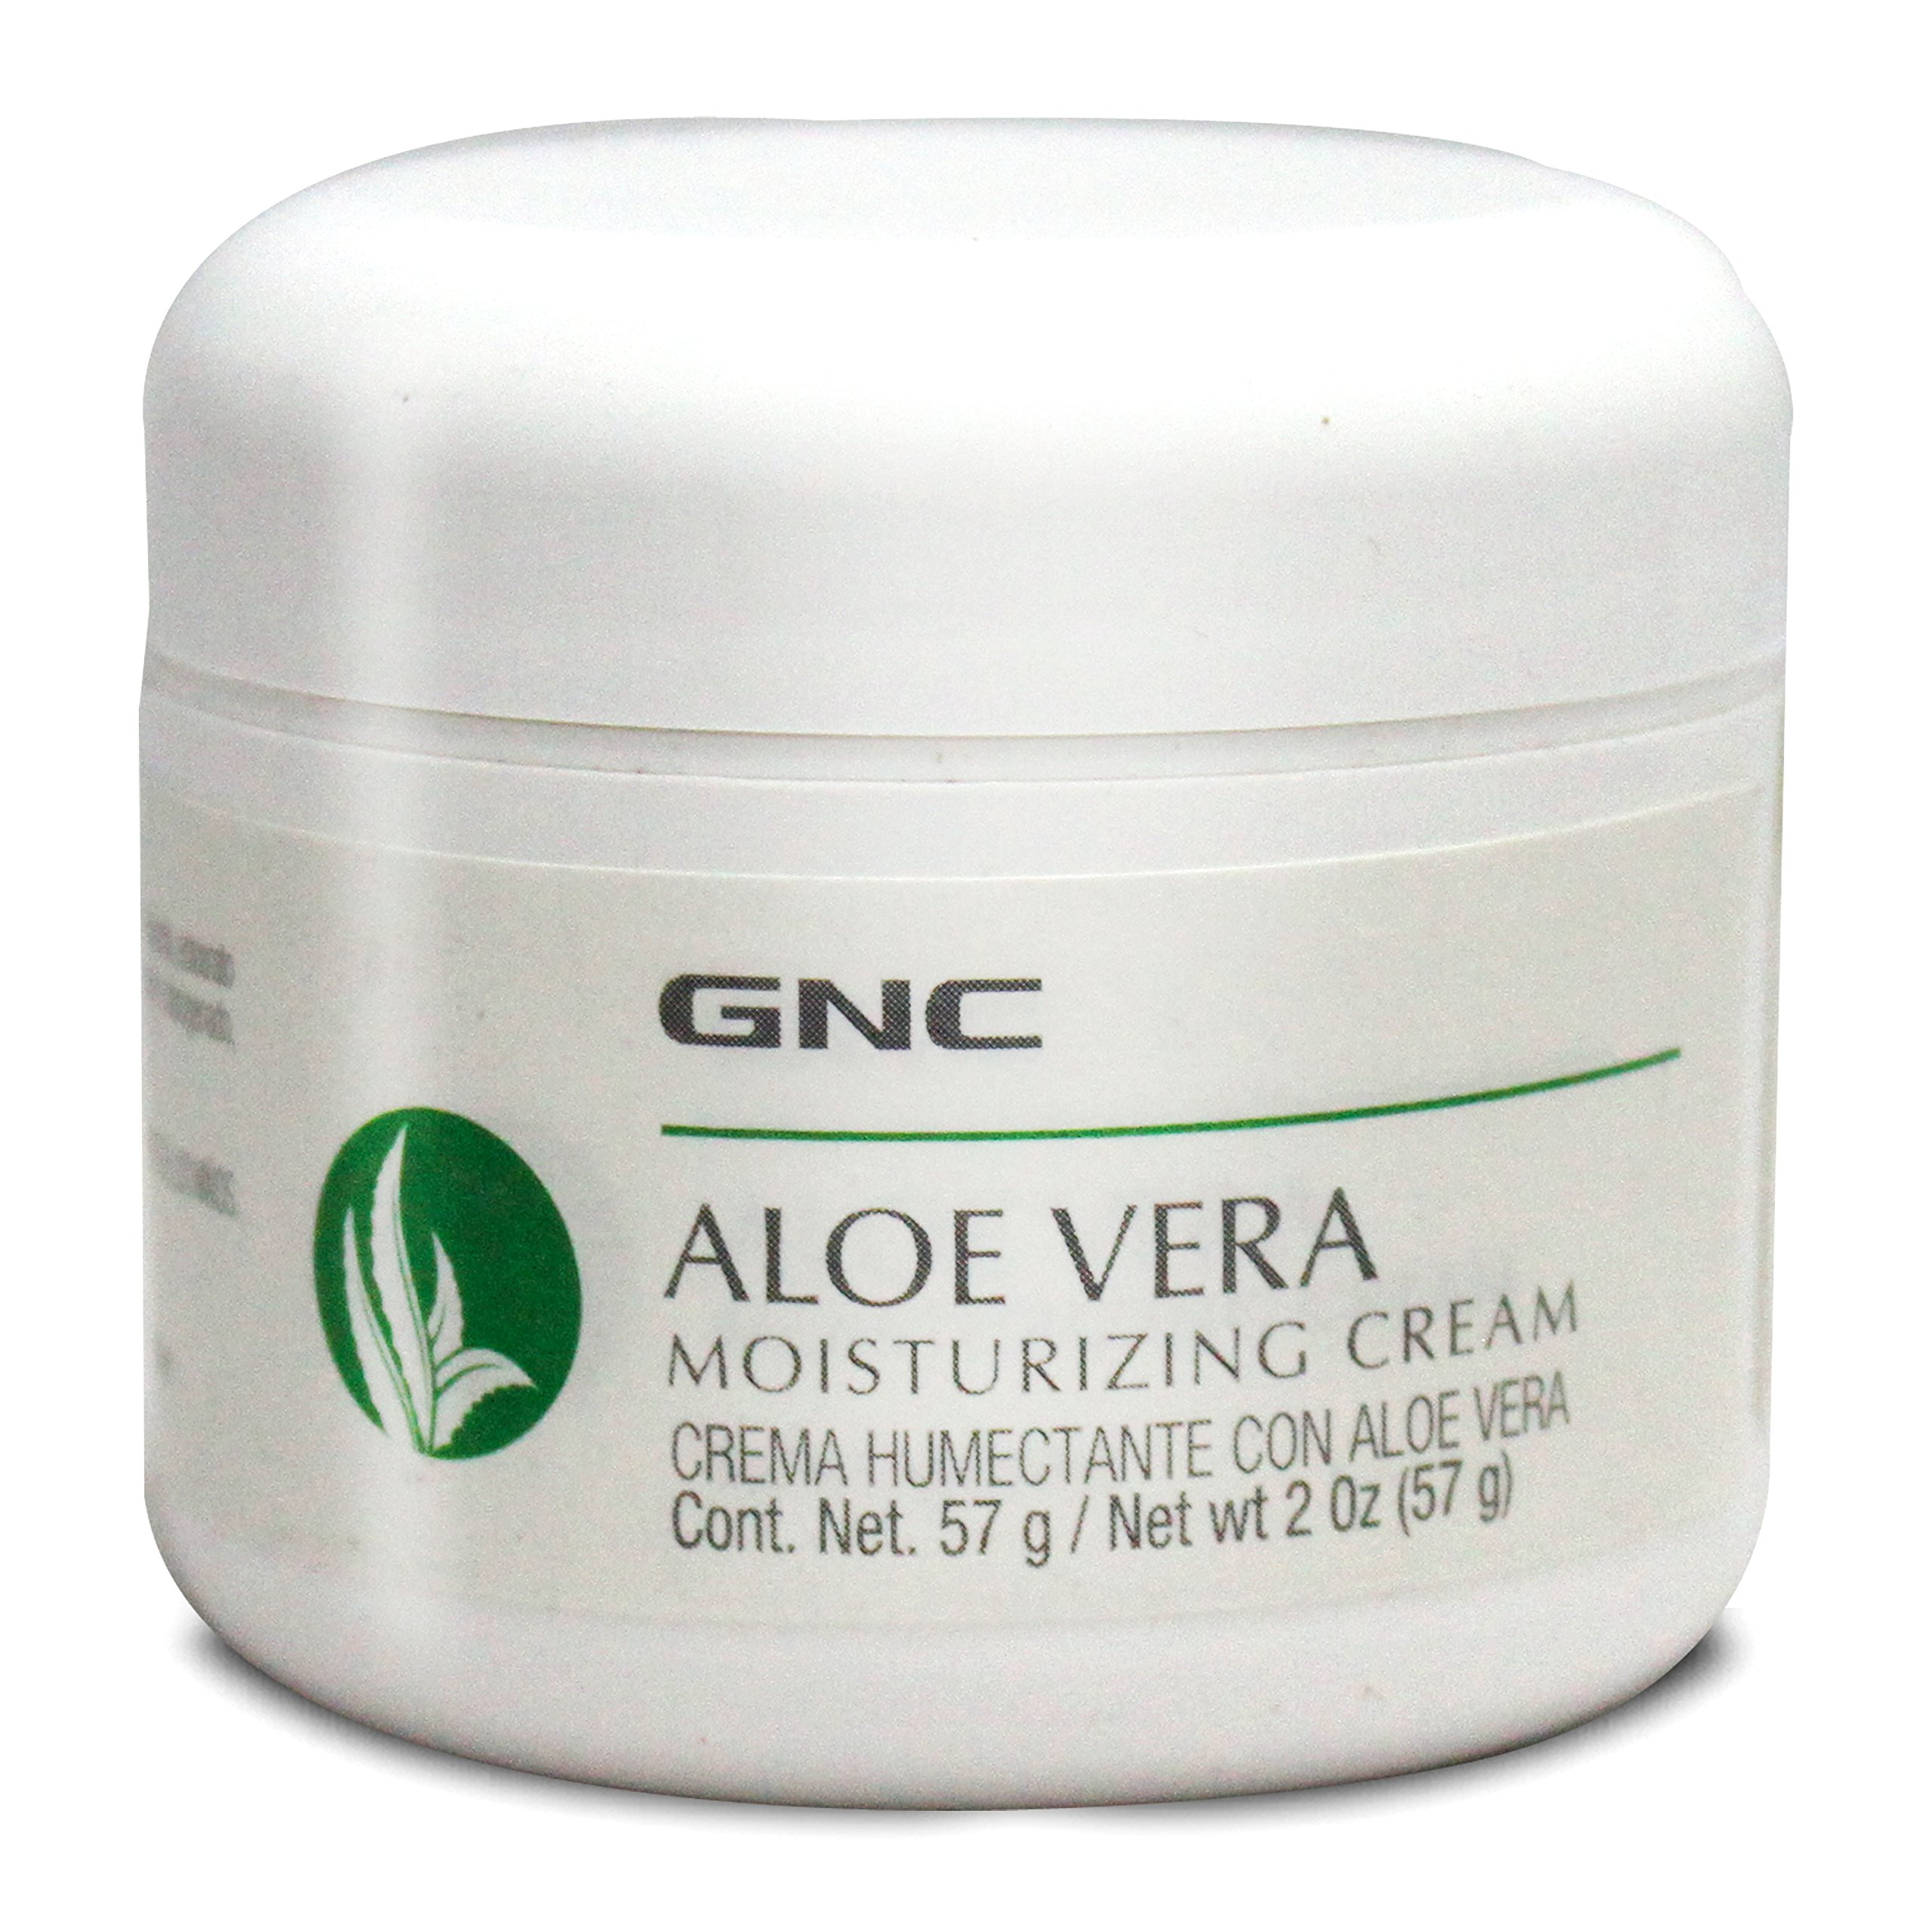 gnc aloe vera moisturizing cream review